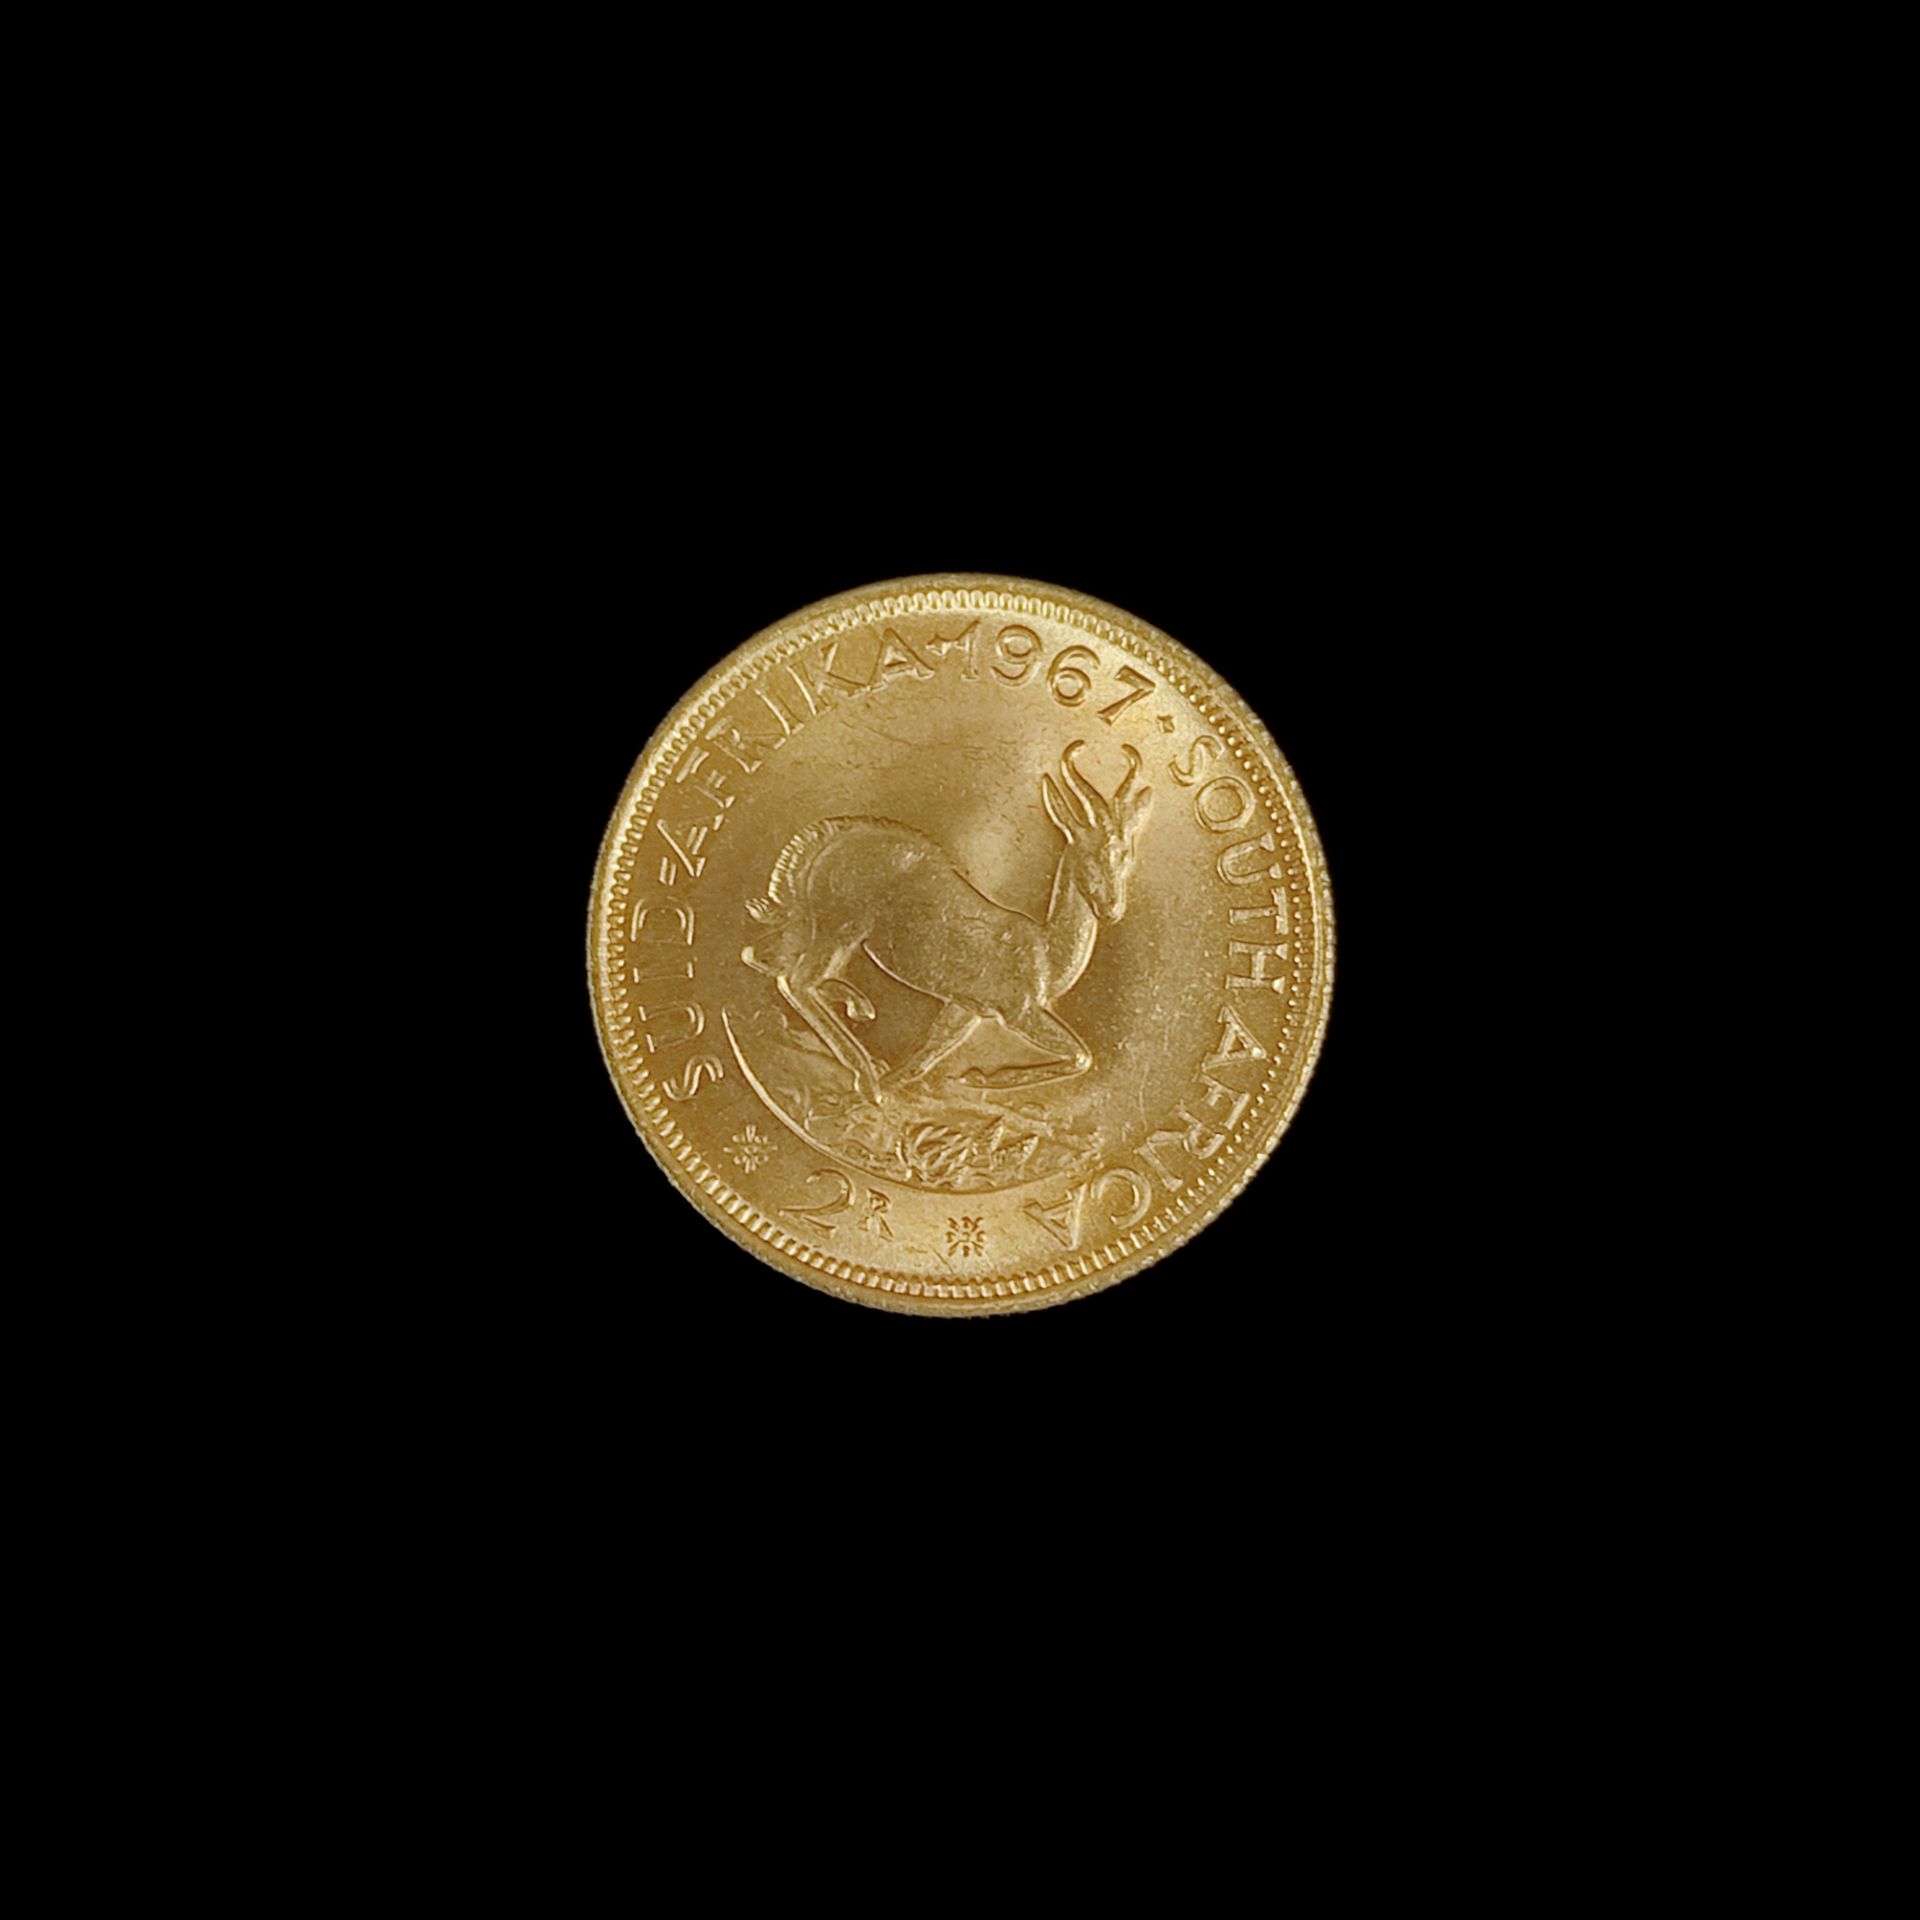 Goldmünze, 2 Rand (1 Sovereign), Avers: Porträt Jan van Riebeeck, Revers: Springbock, Südafrika 196 - Bild 2 aus 2